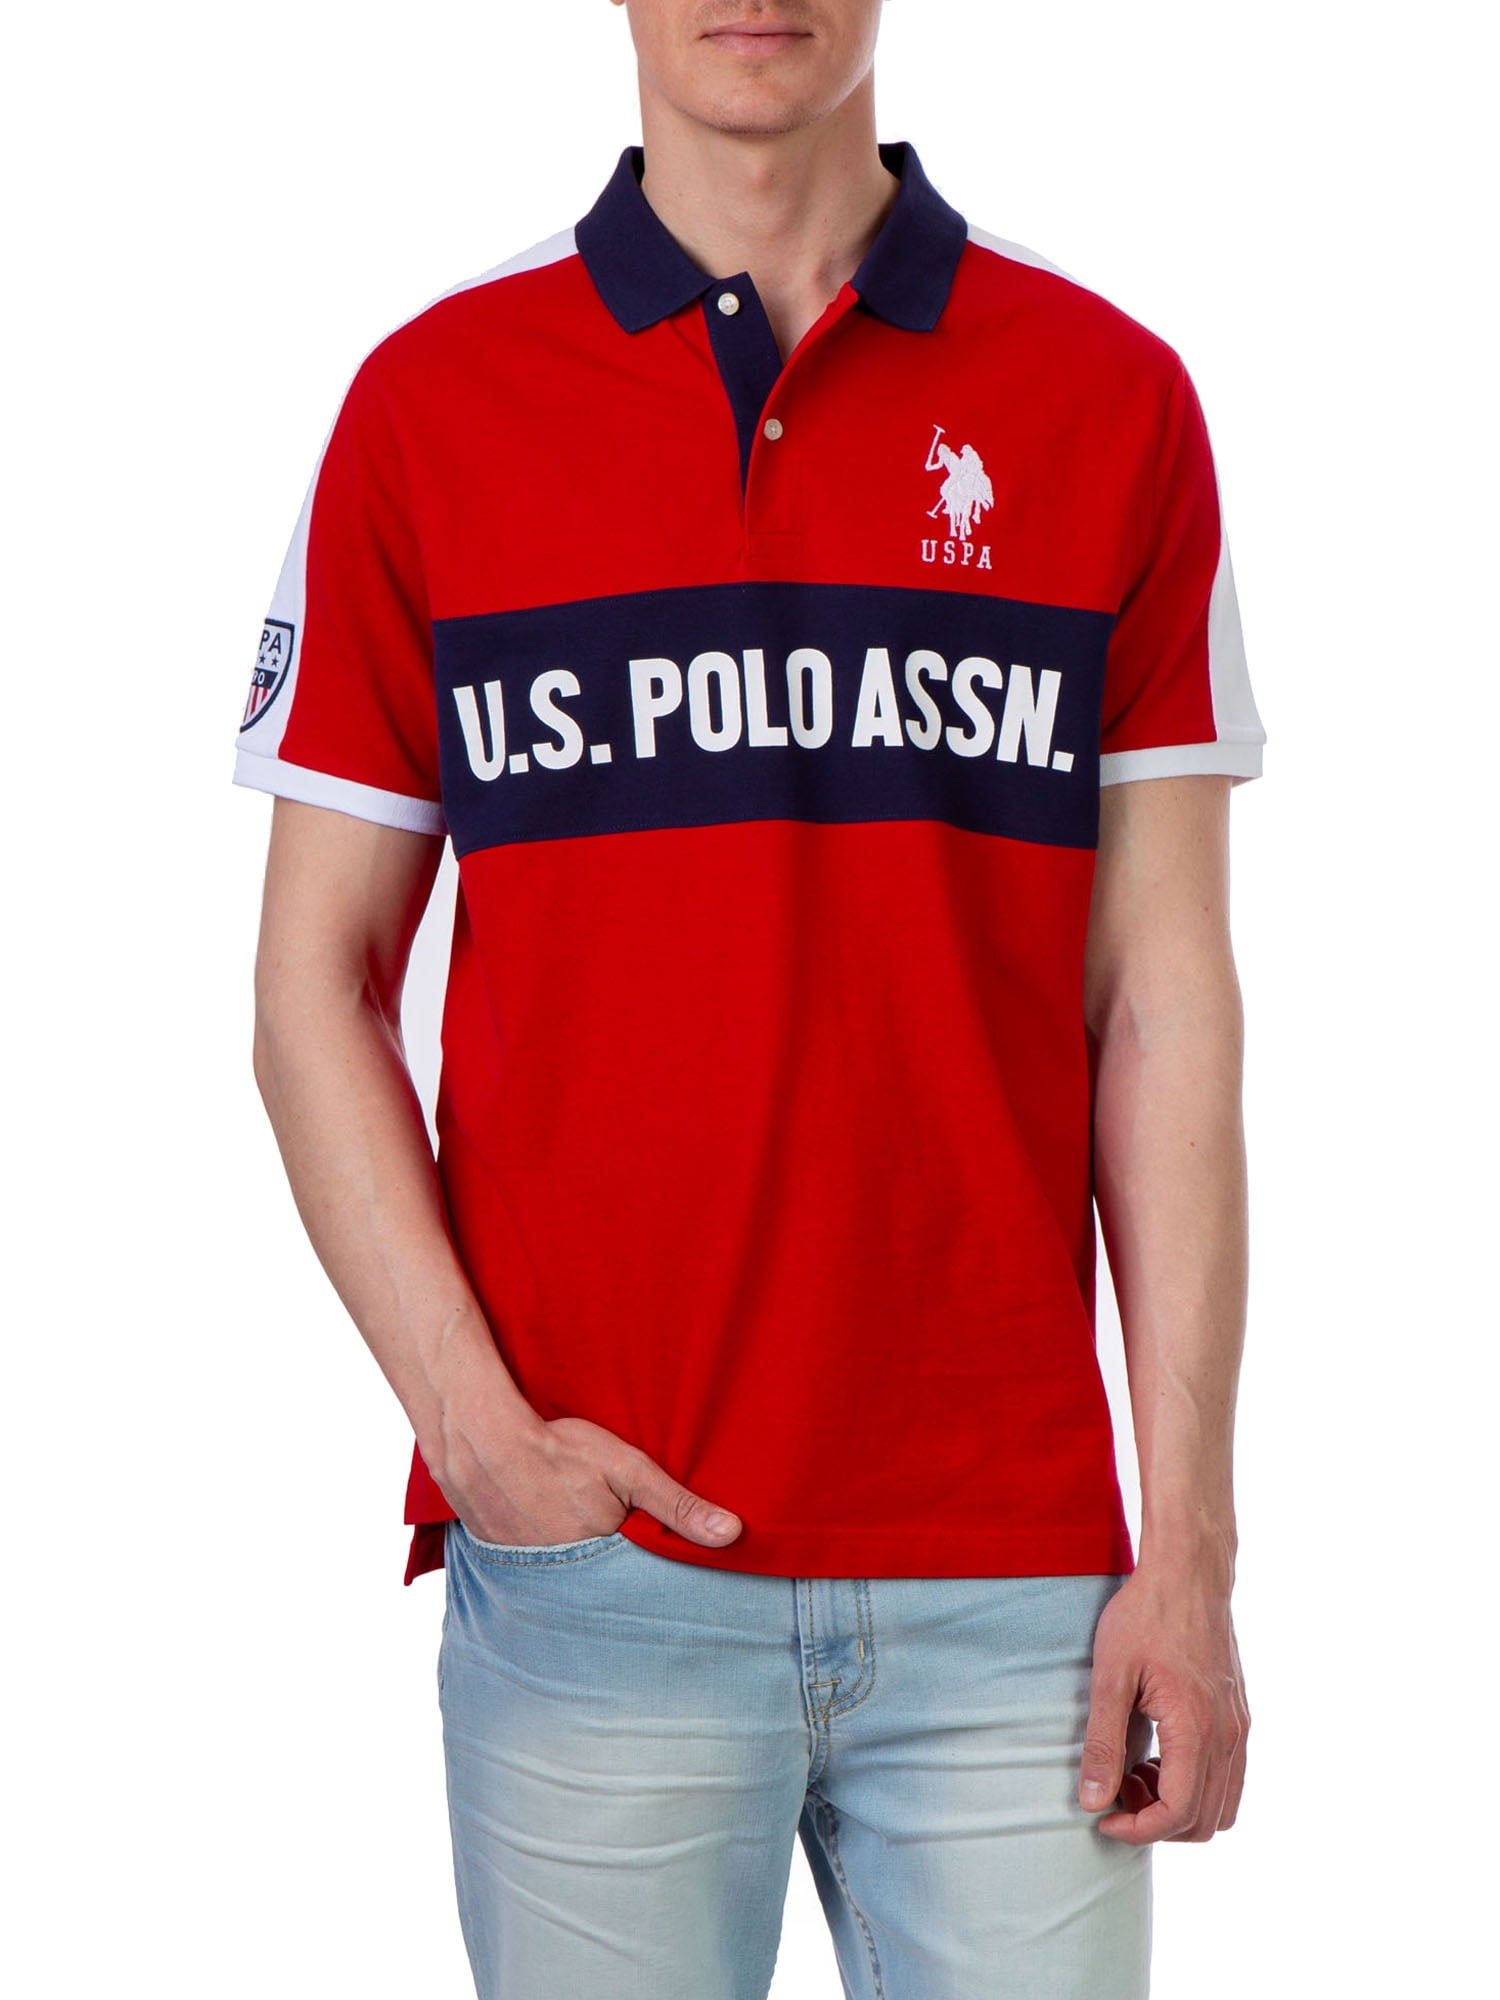 Polo Assn U.S Mens Color Block Stripe Pique Polo Shirt with 3 Patch